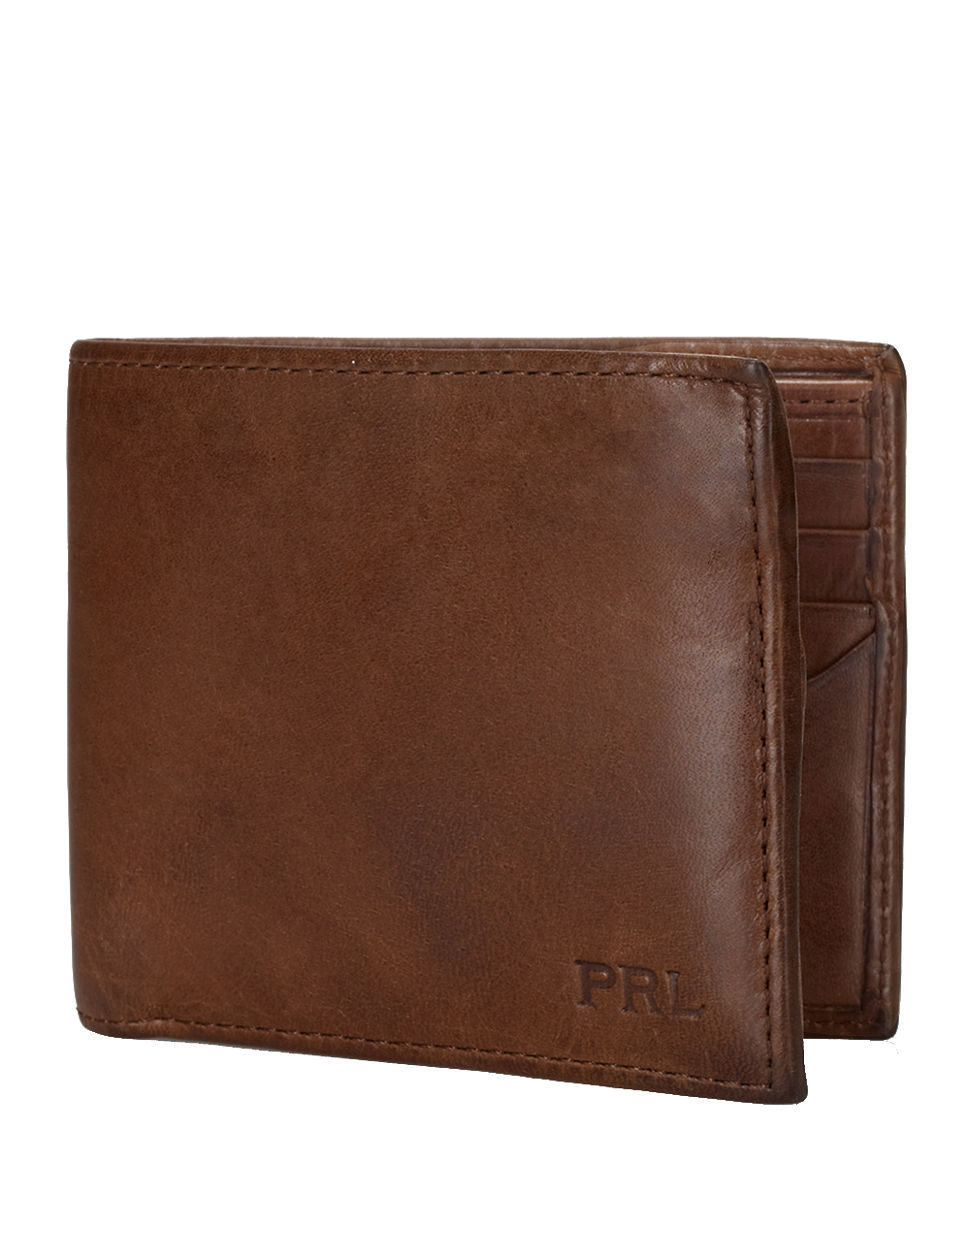 Lyst - Polo Ralph Lauren Leather Window Billfold Wallet in Brown for Men